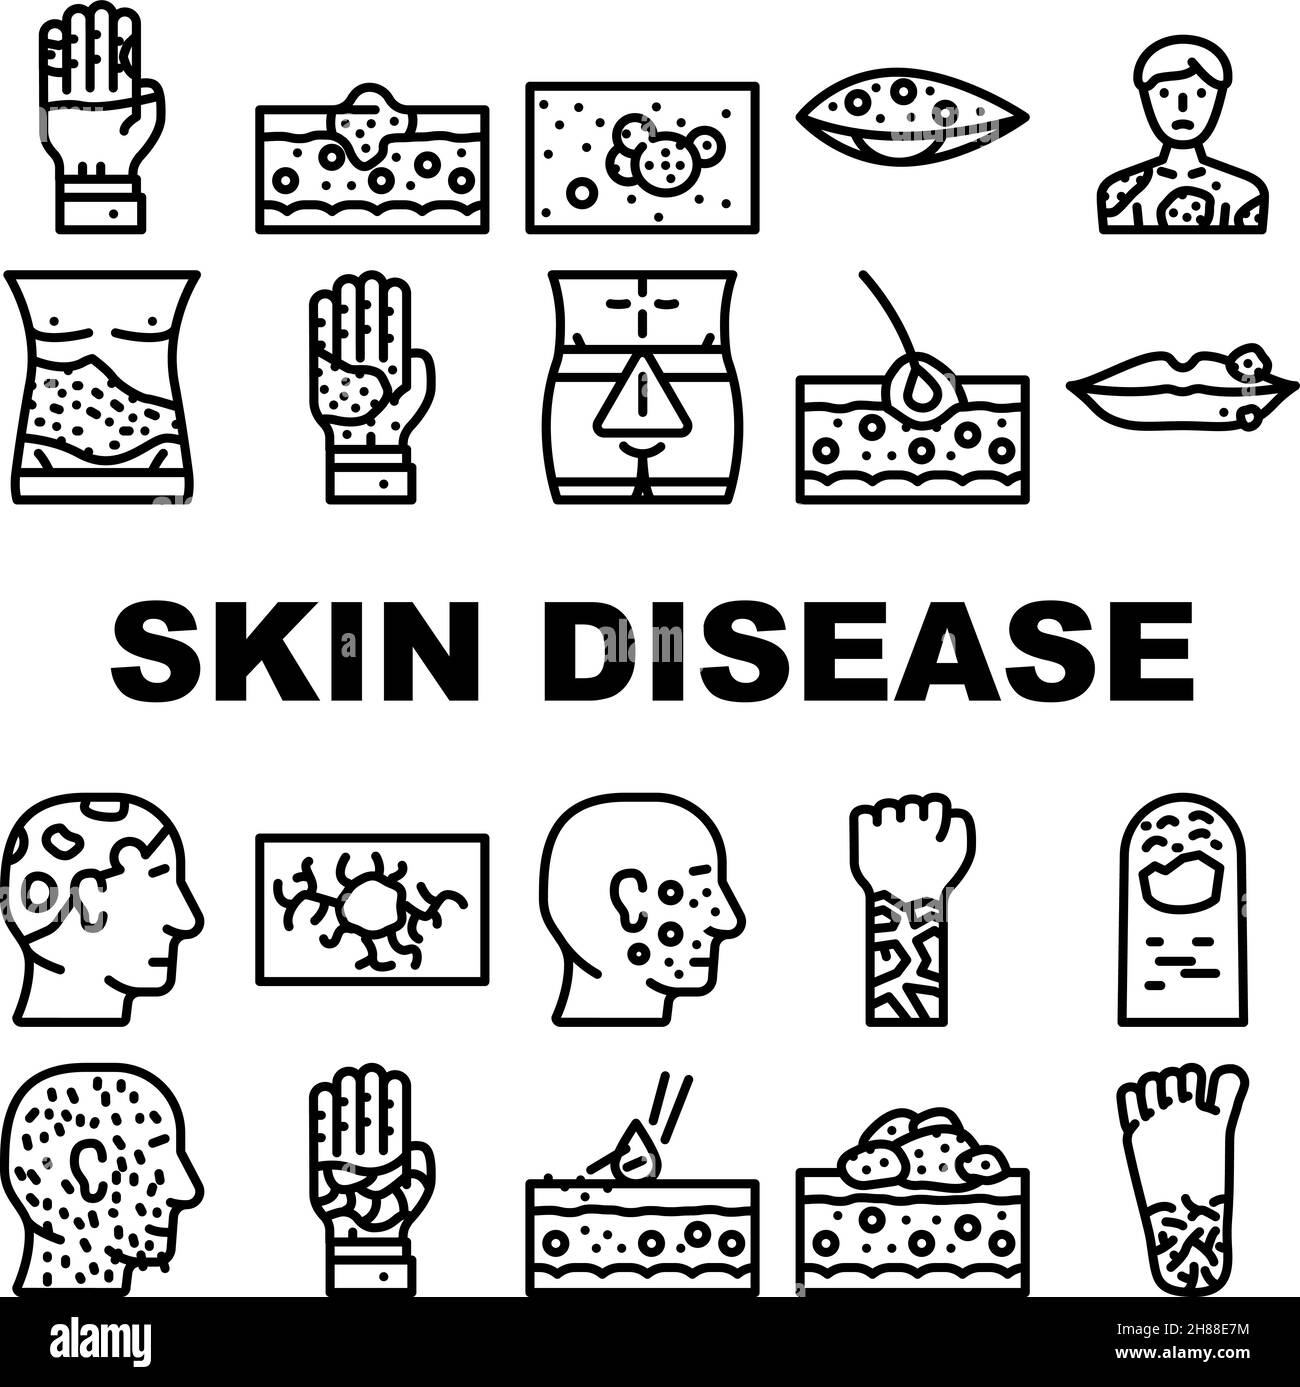 Skin Disease Human Health Problem Icons Set Vector Stock Vector